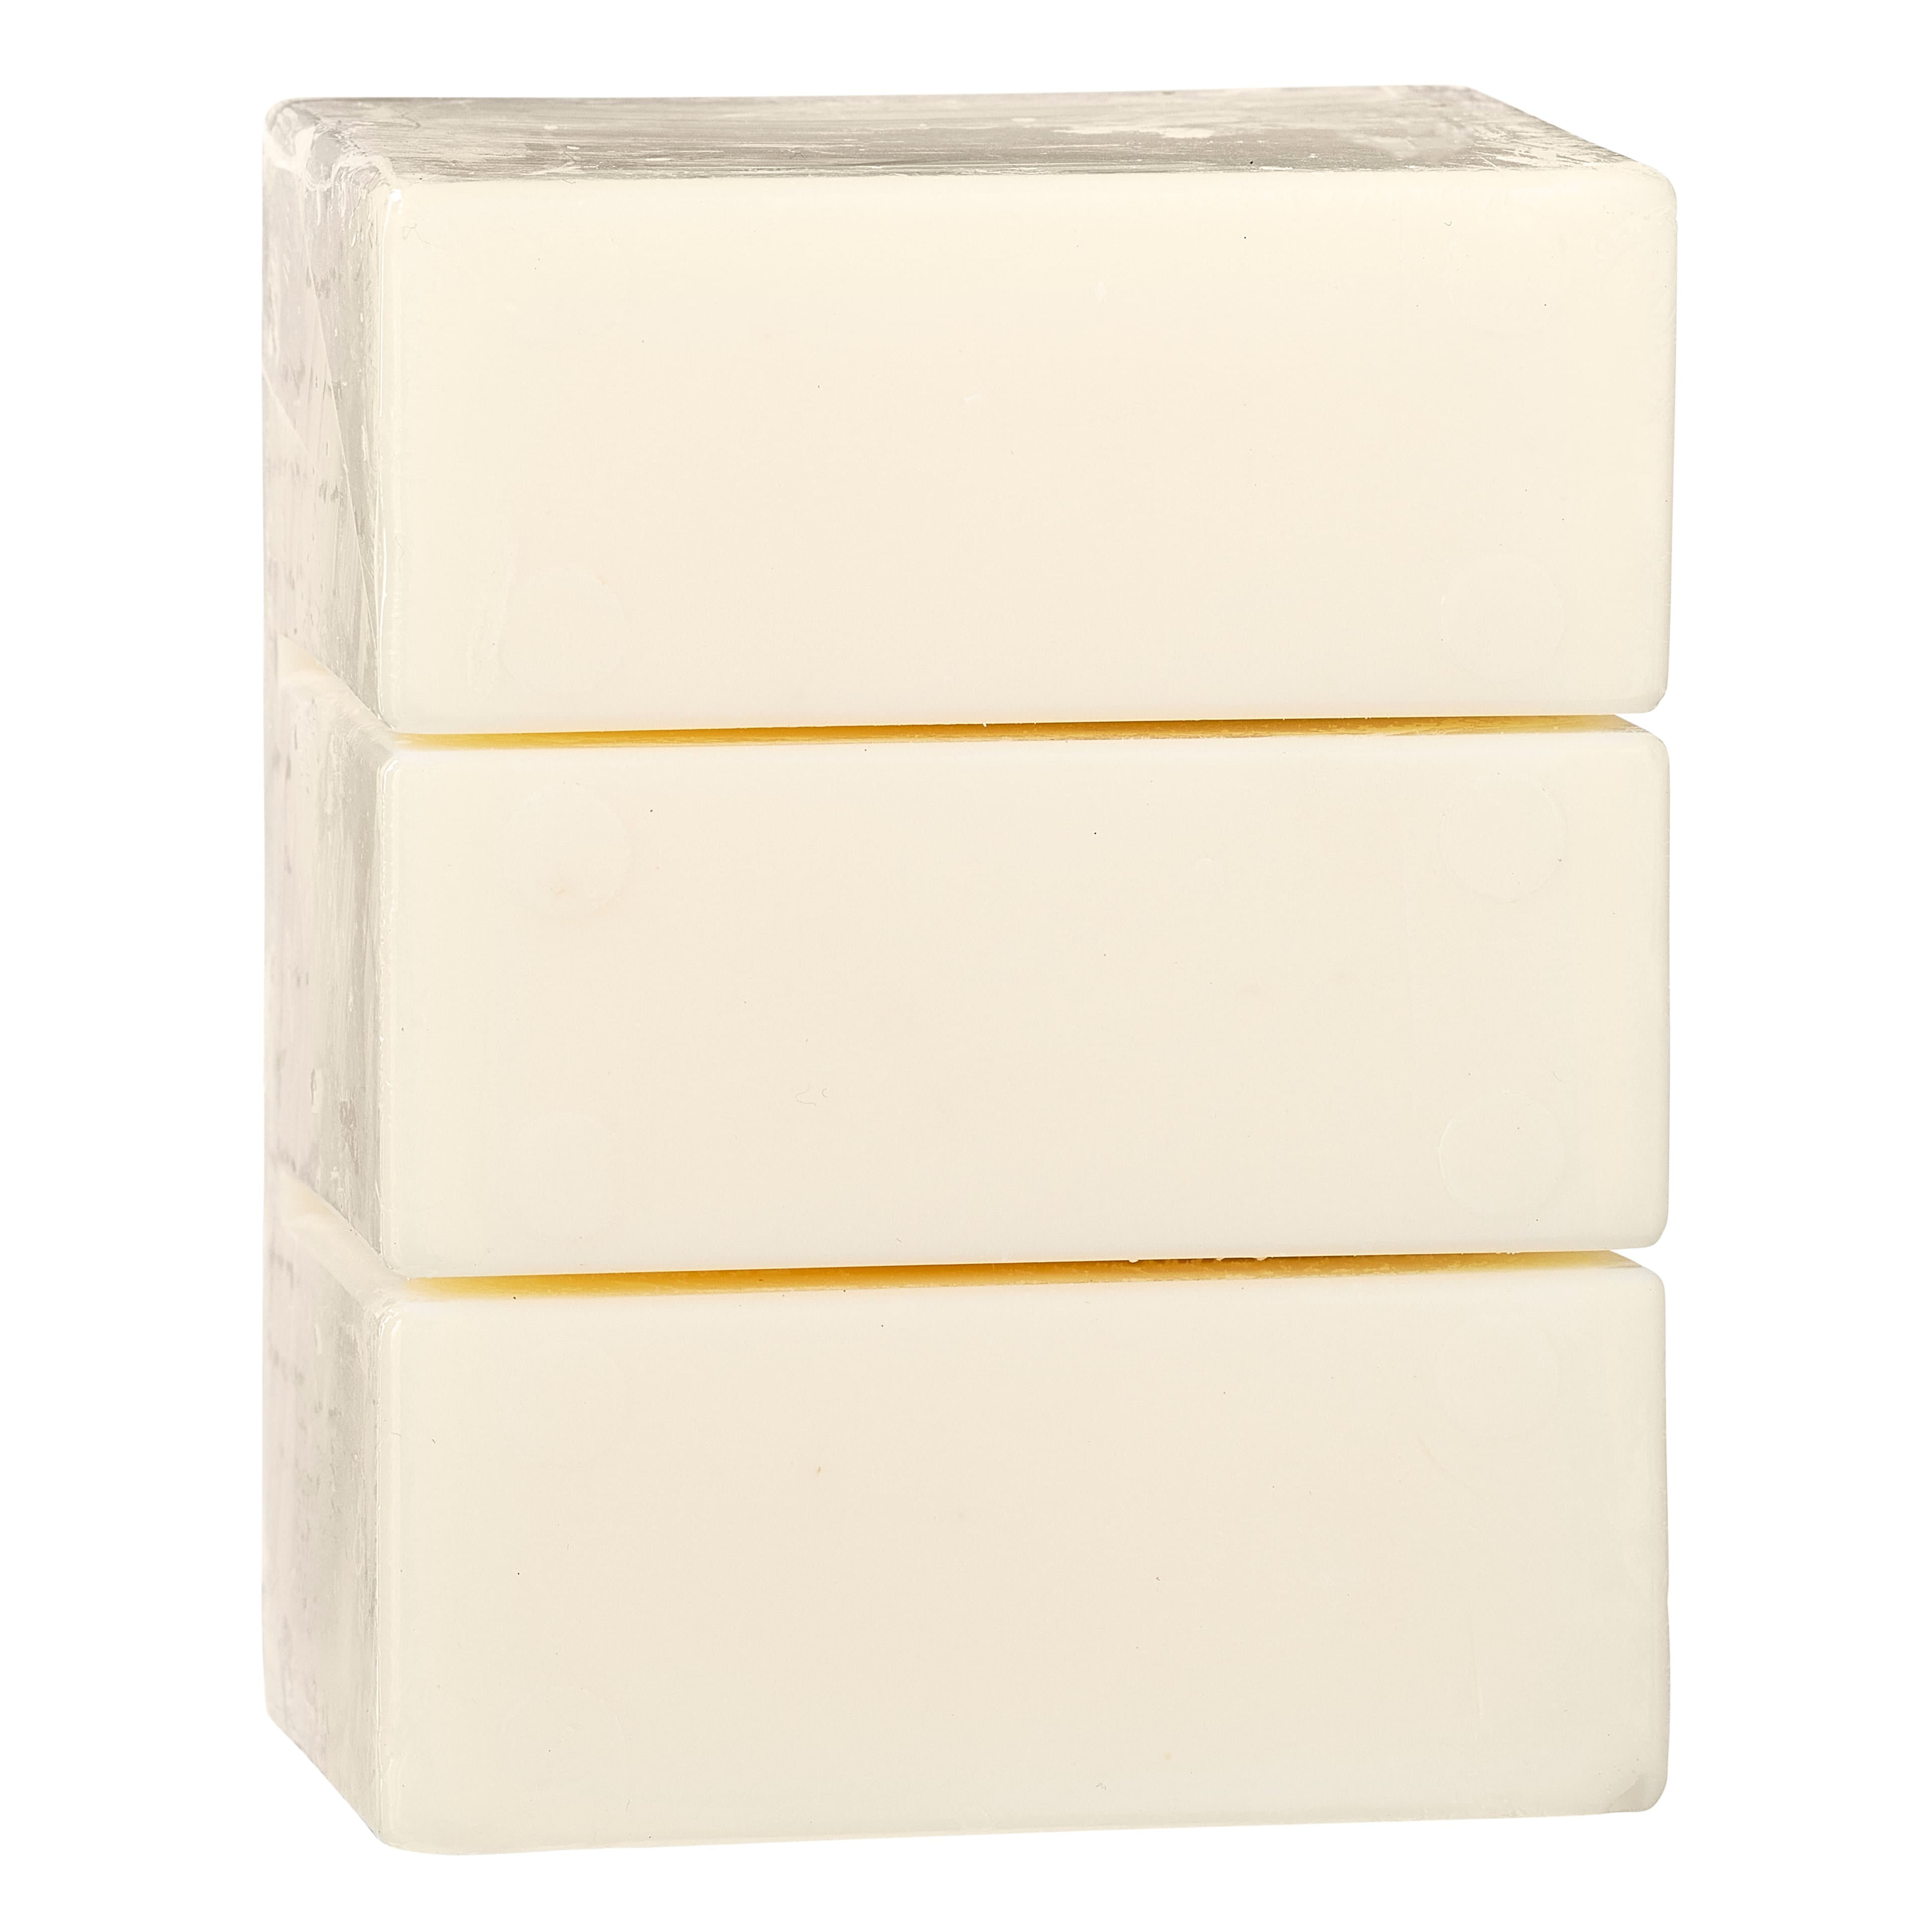 Paraffin Wax Block - Superior Blend, Versatile & Effective - 1lb